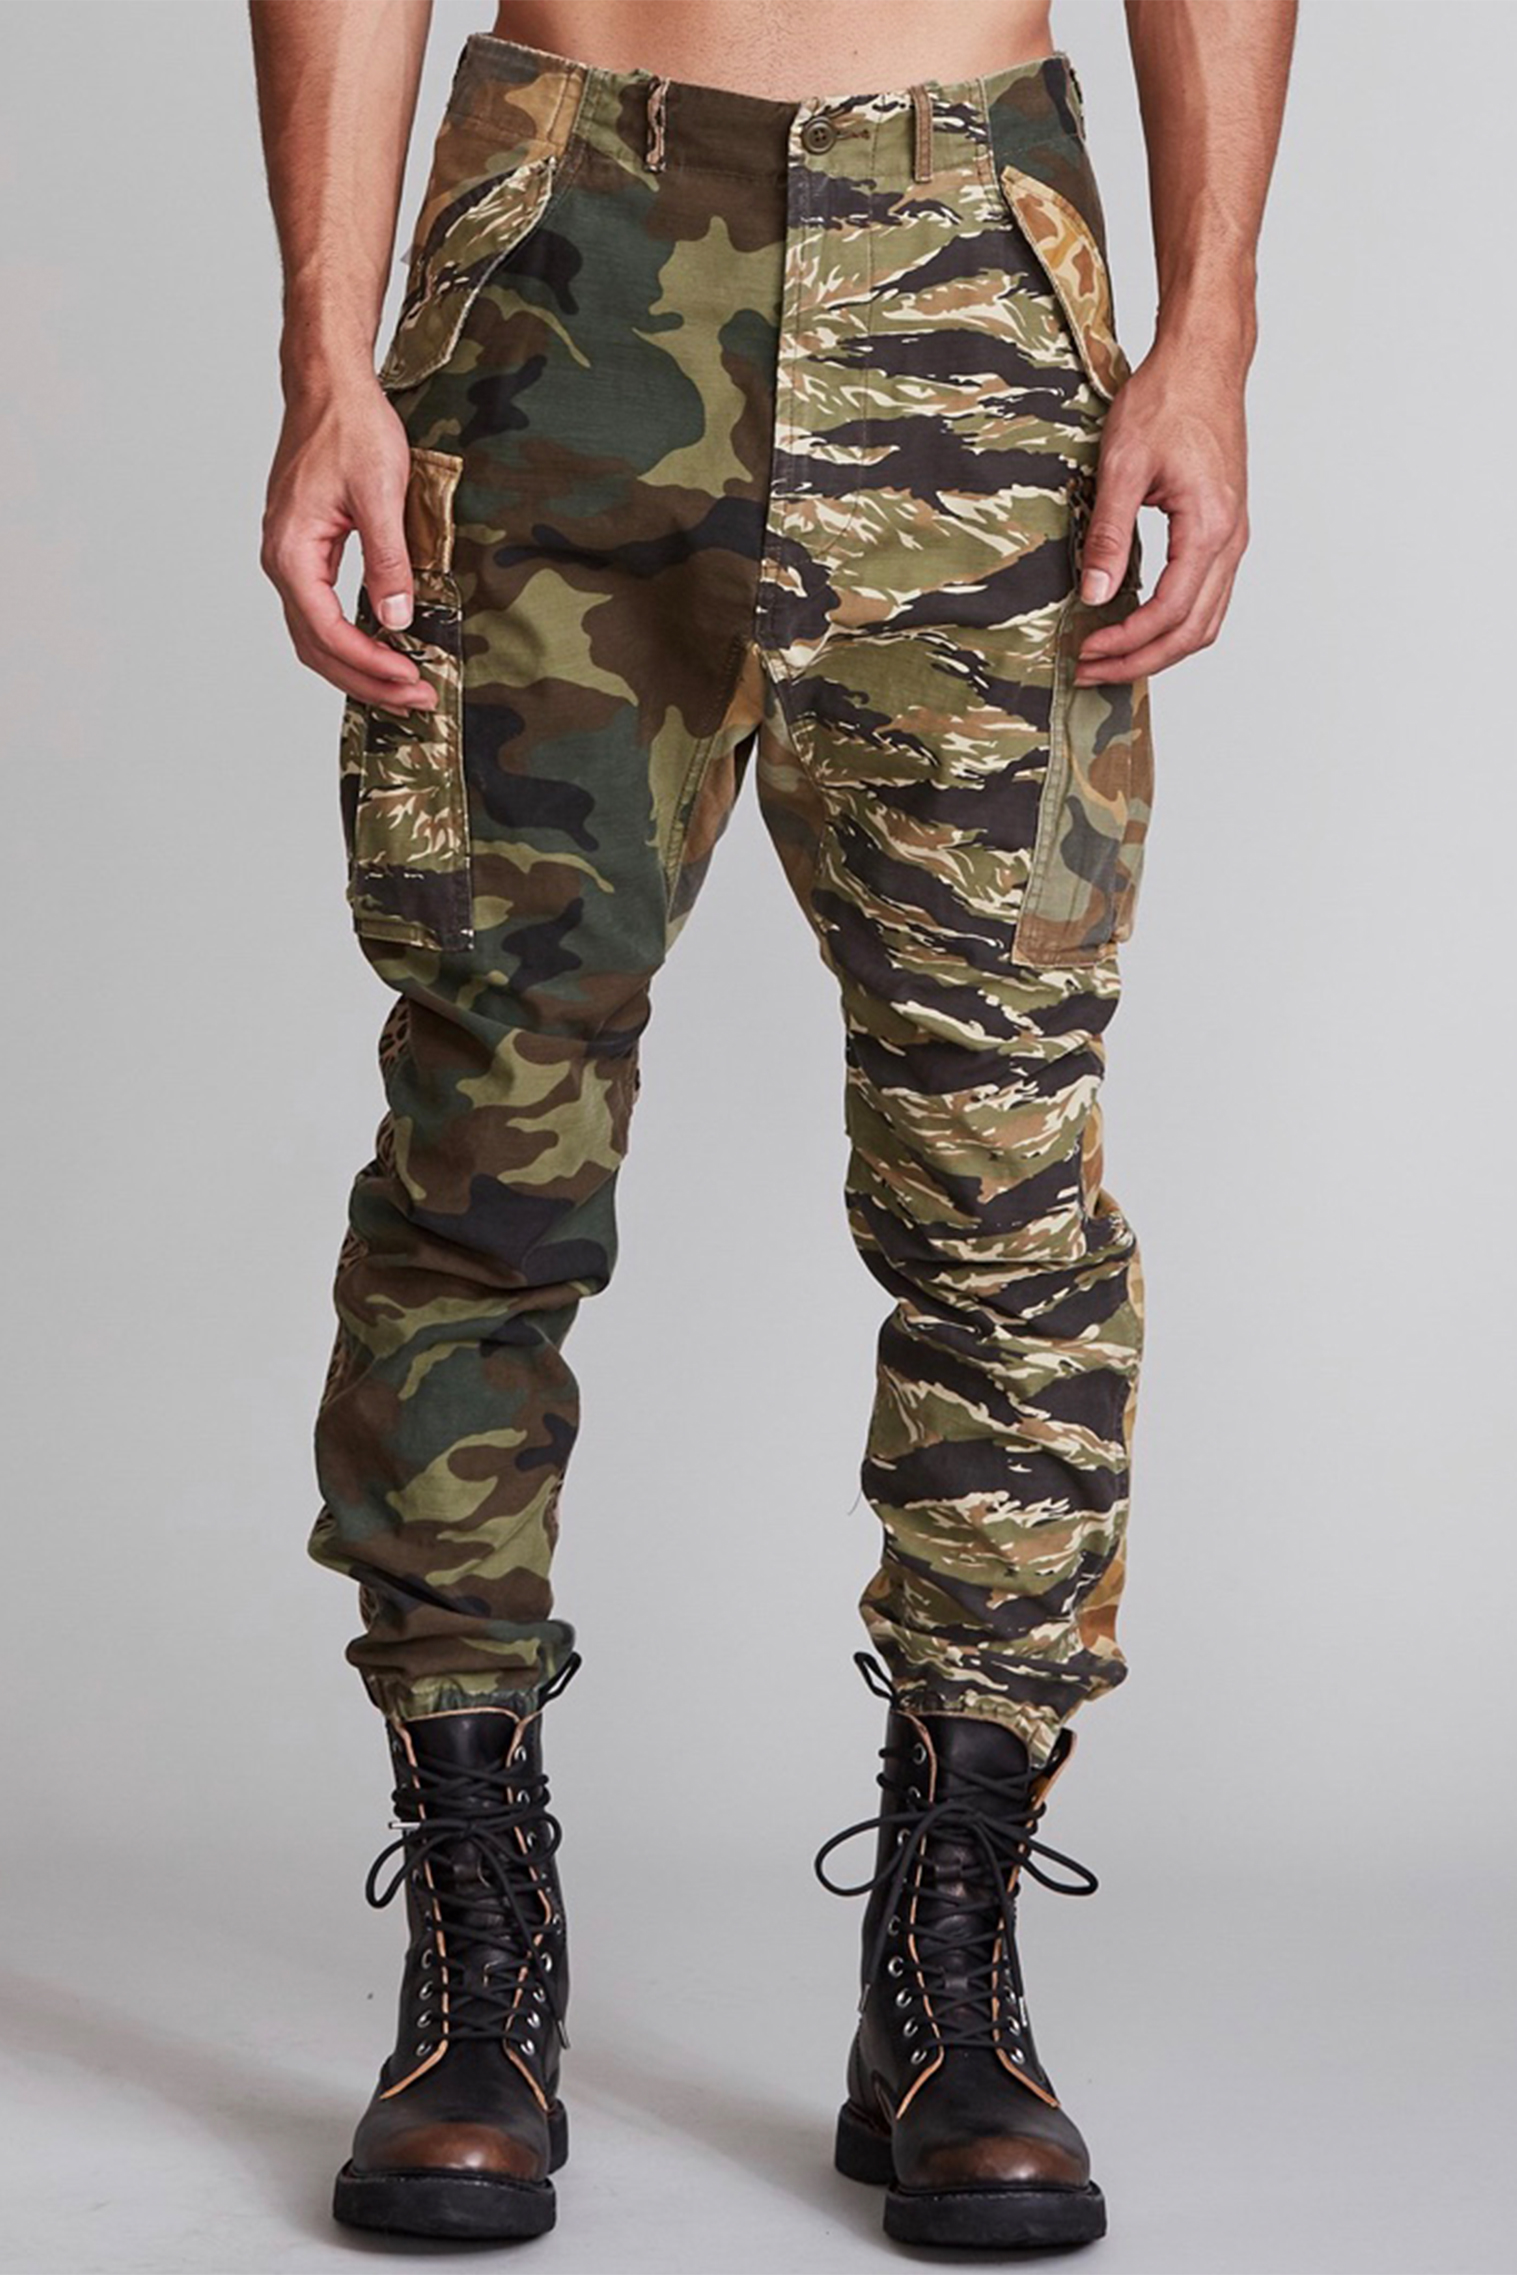 Buy tactical pants, military pants - UTactic online store